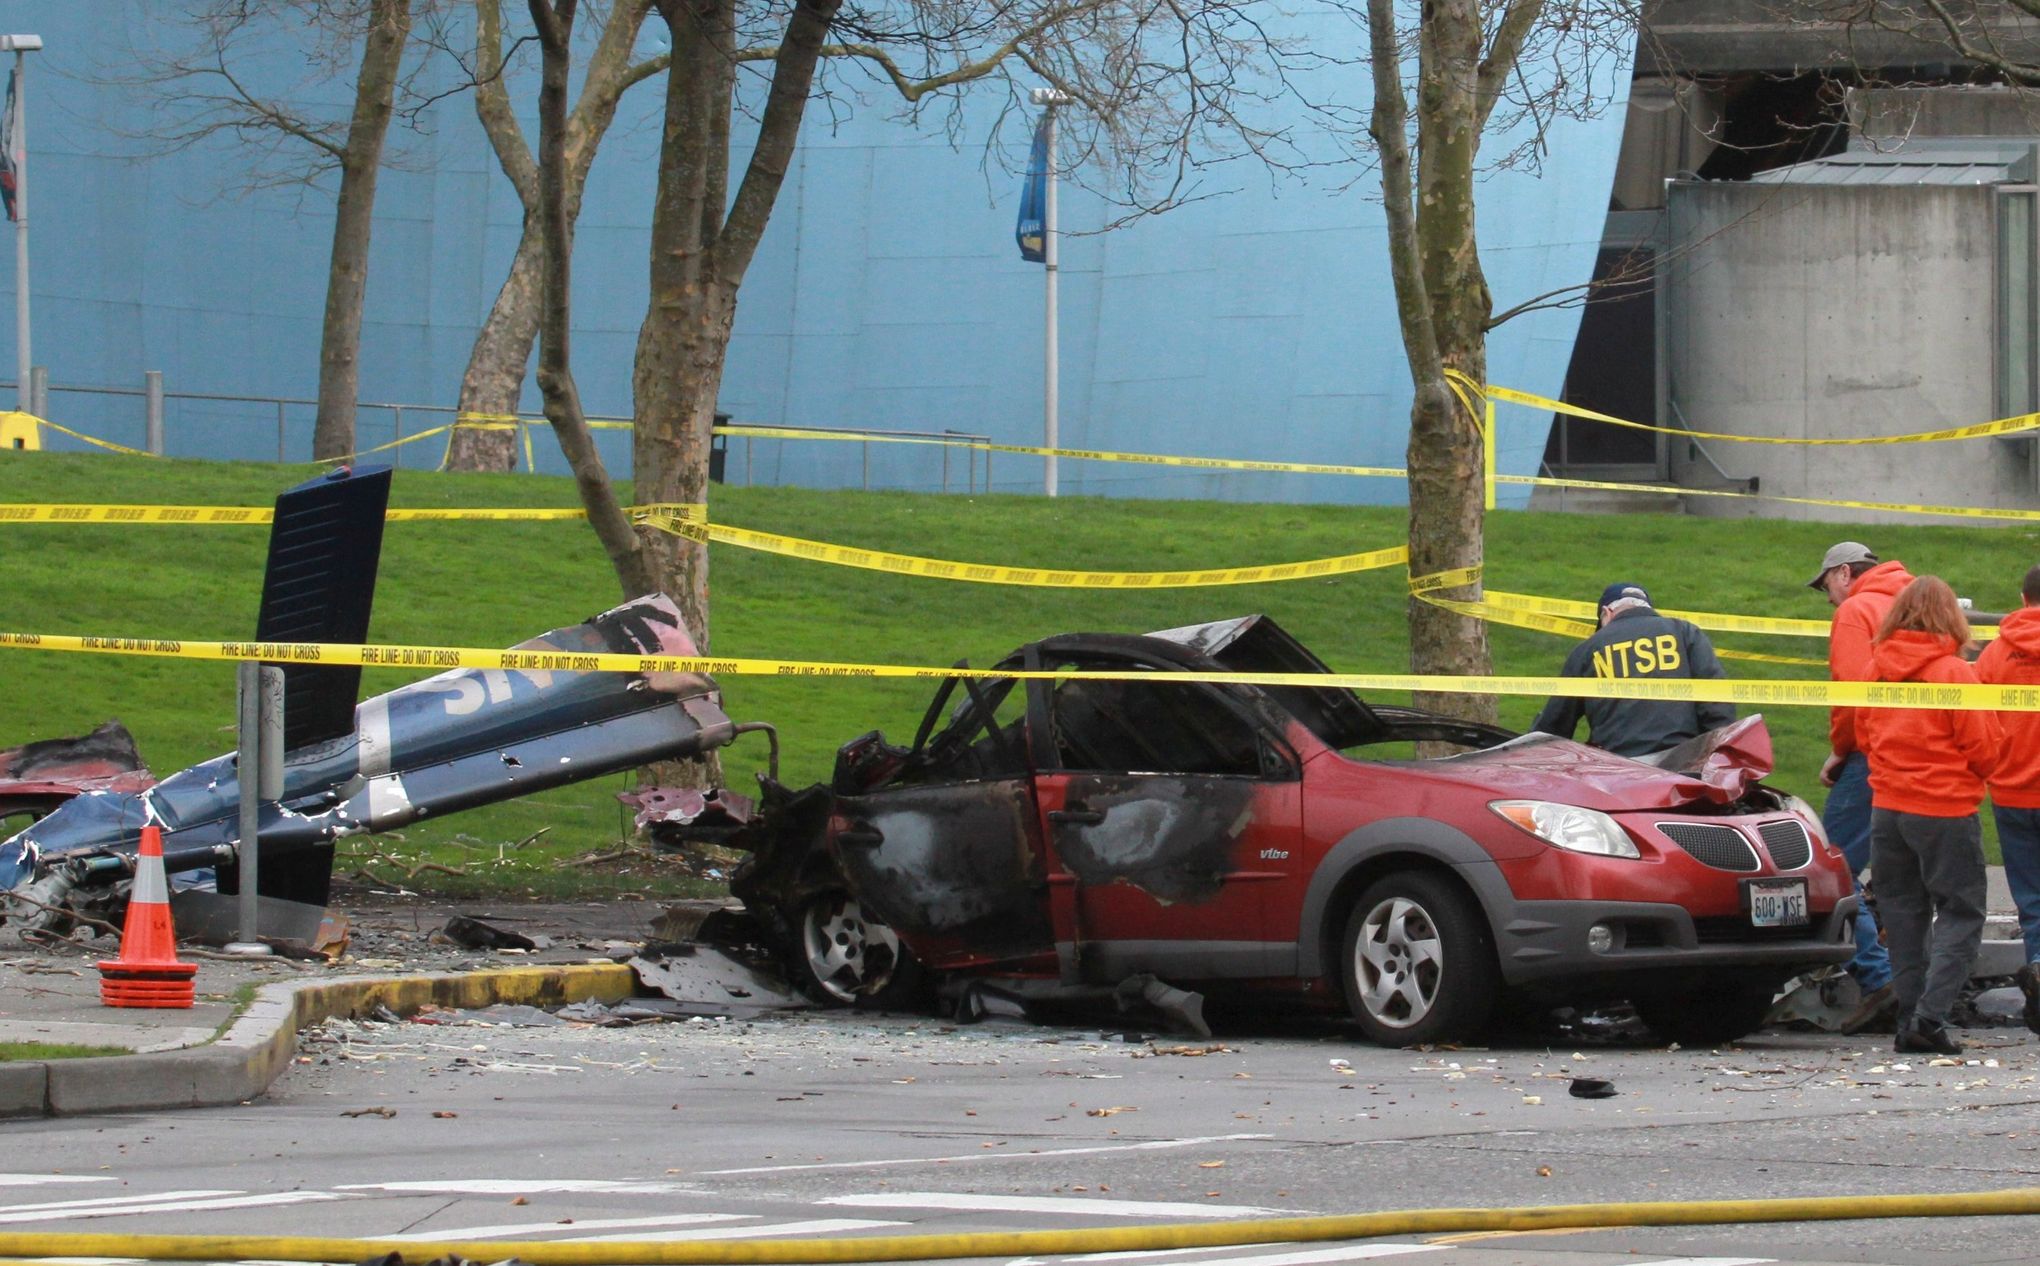 New video shows sports car driver speeding, losing control before fatal  Bellevue crash